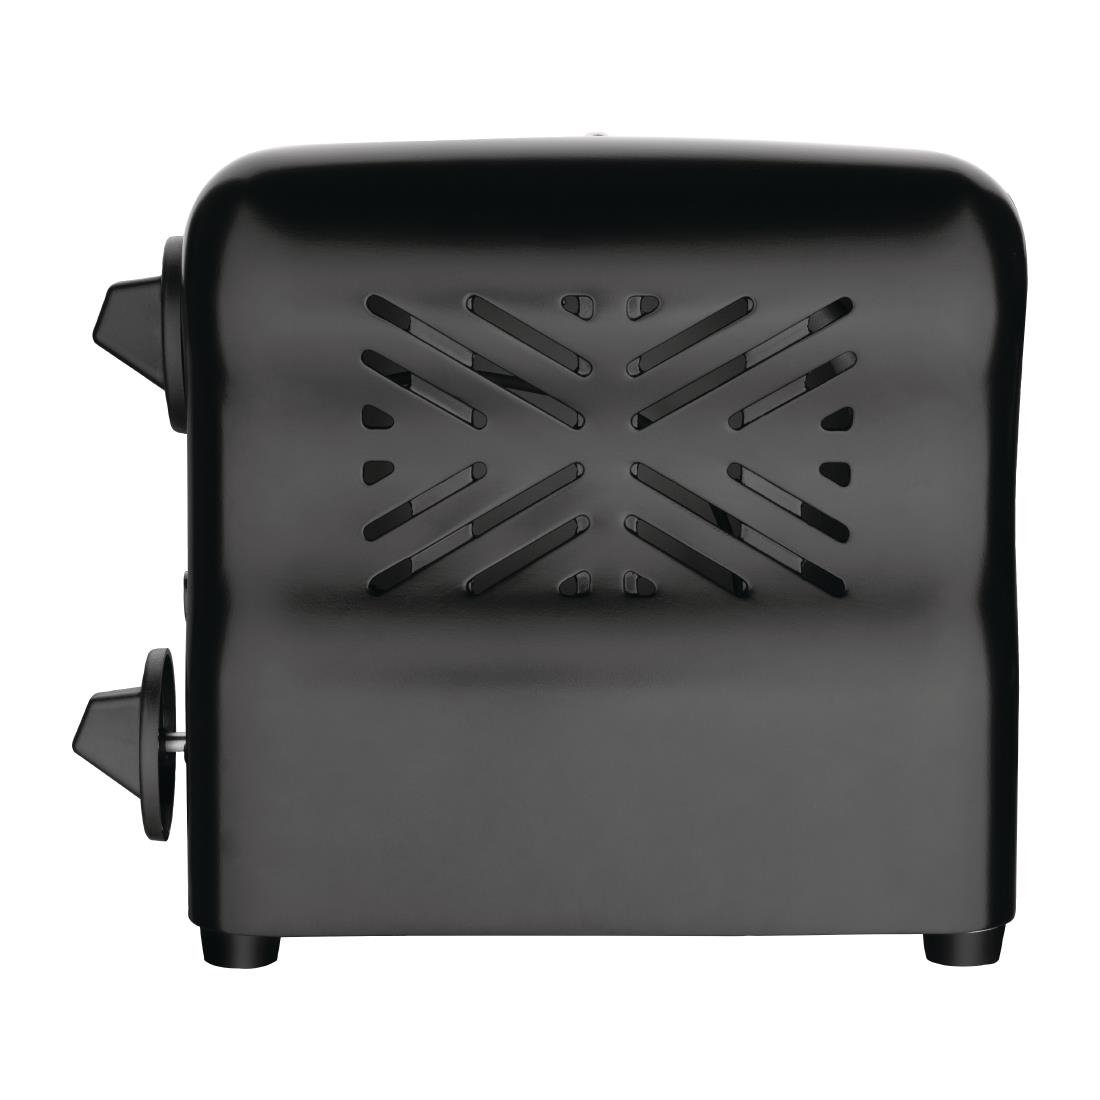 Rowlett Esprit 2 Slot Toaster Jet Black